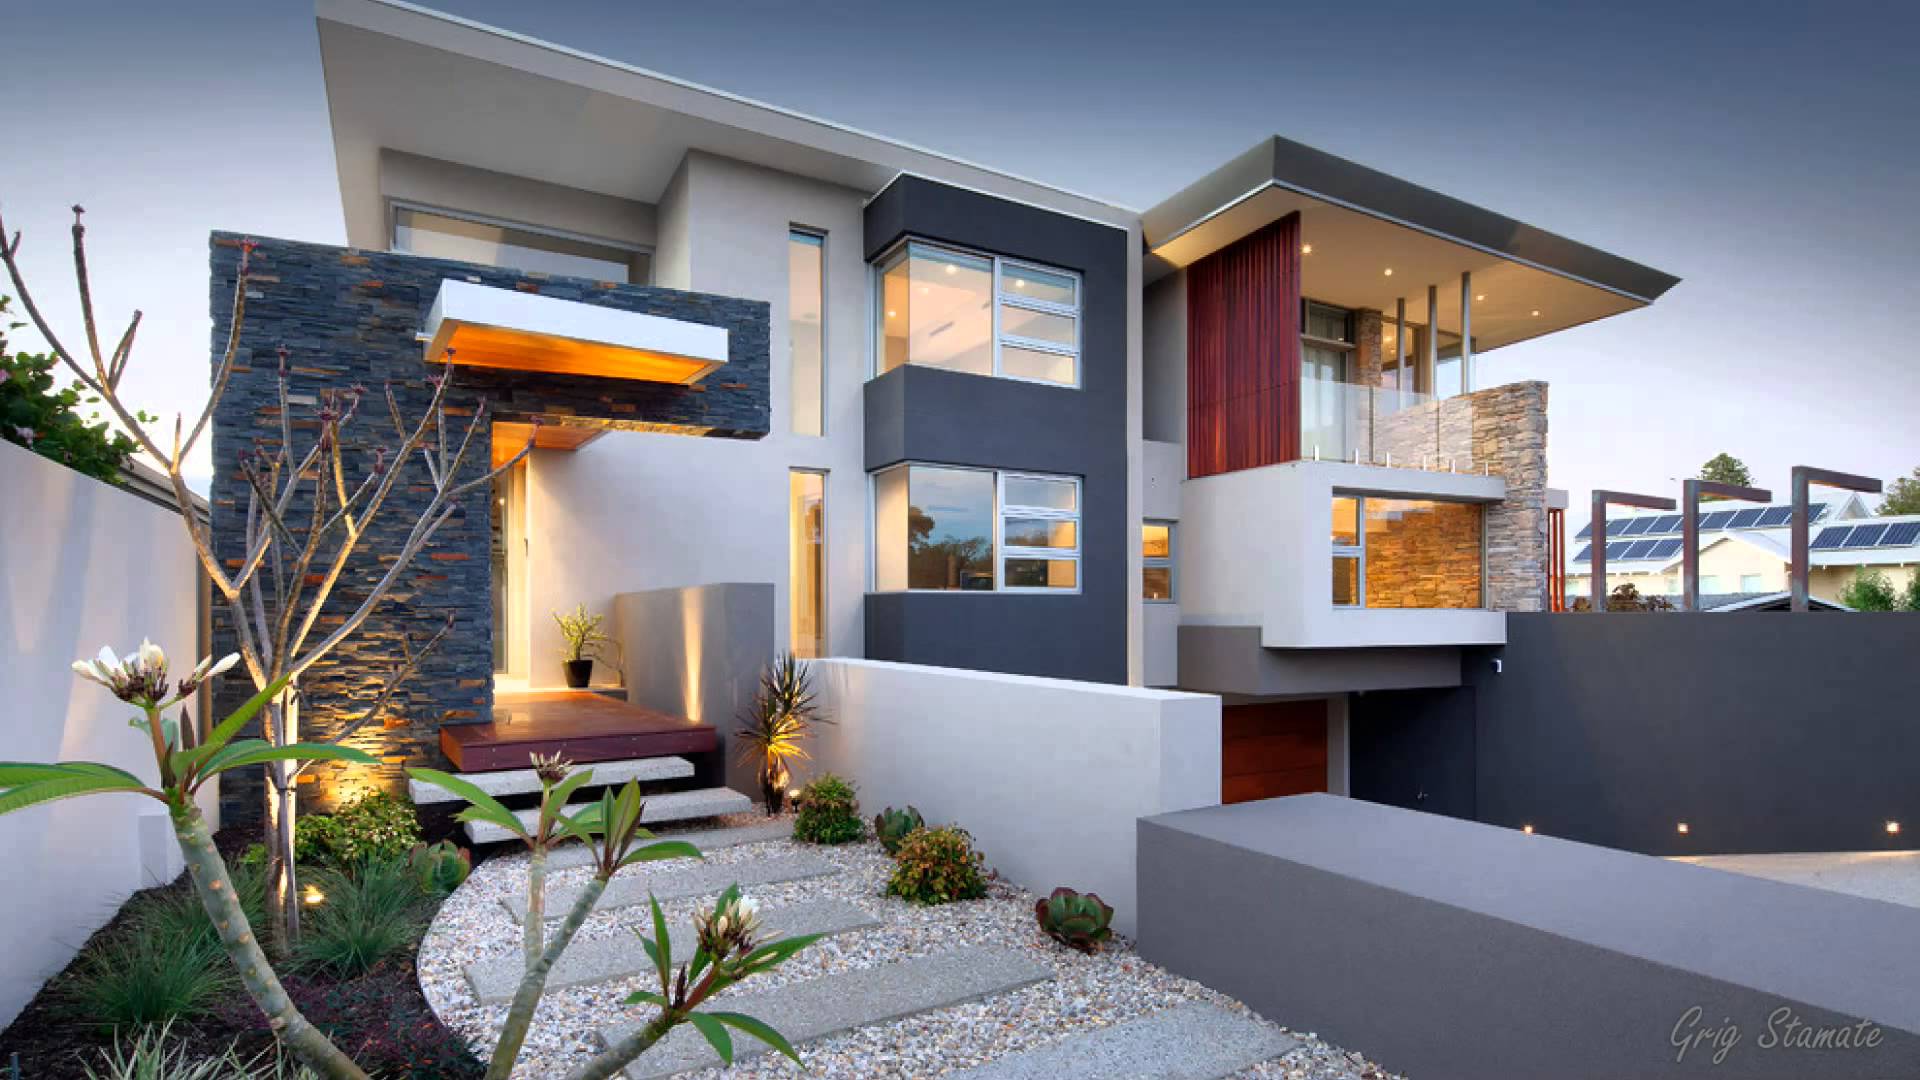 stunning ultra modern house designs - youtube RJUMZQT